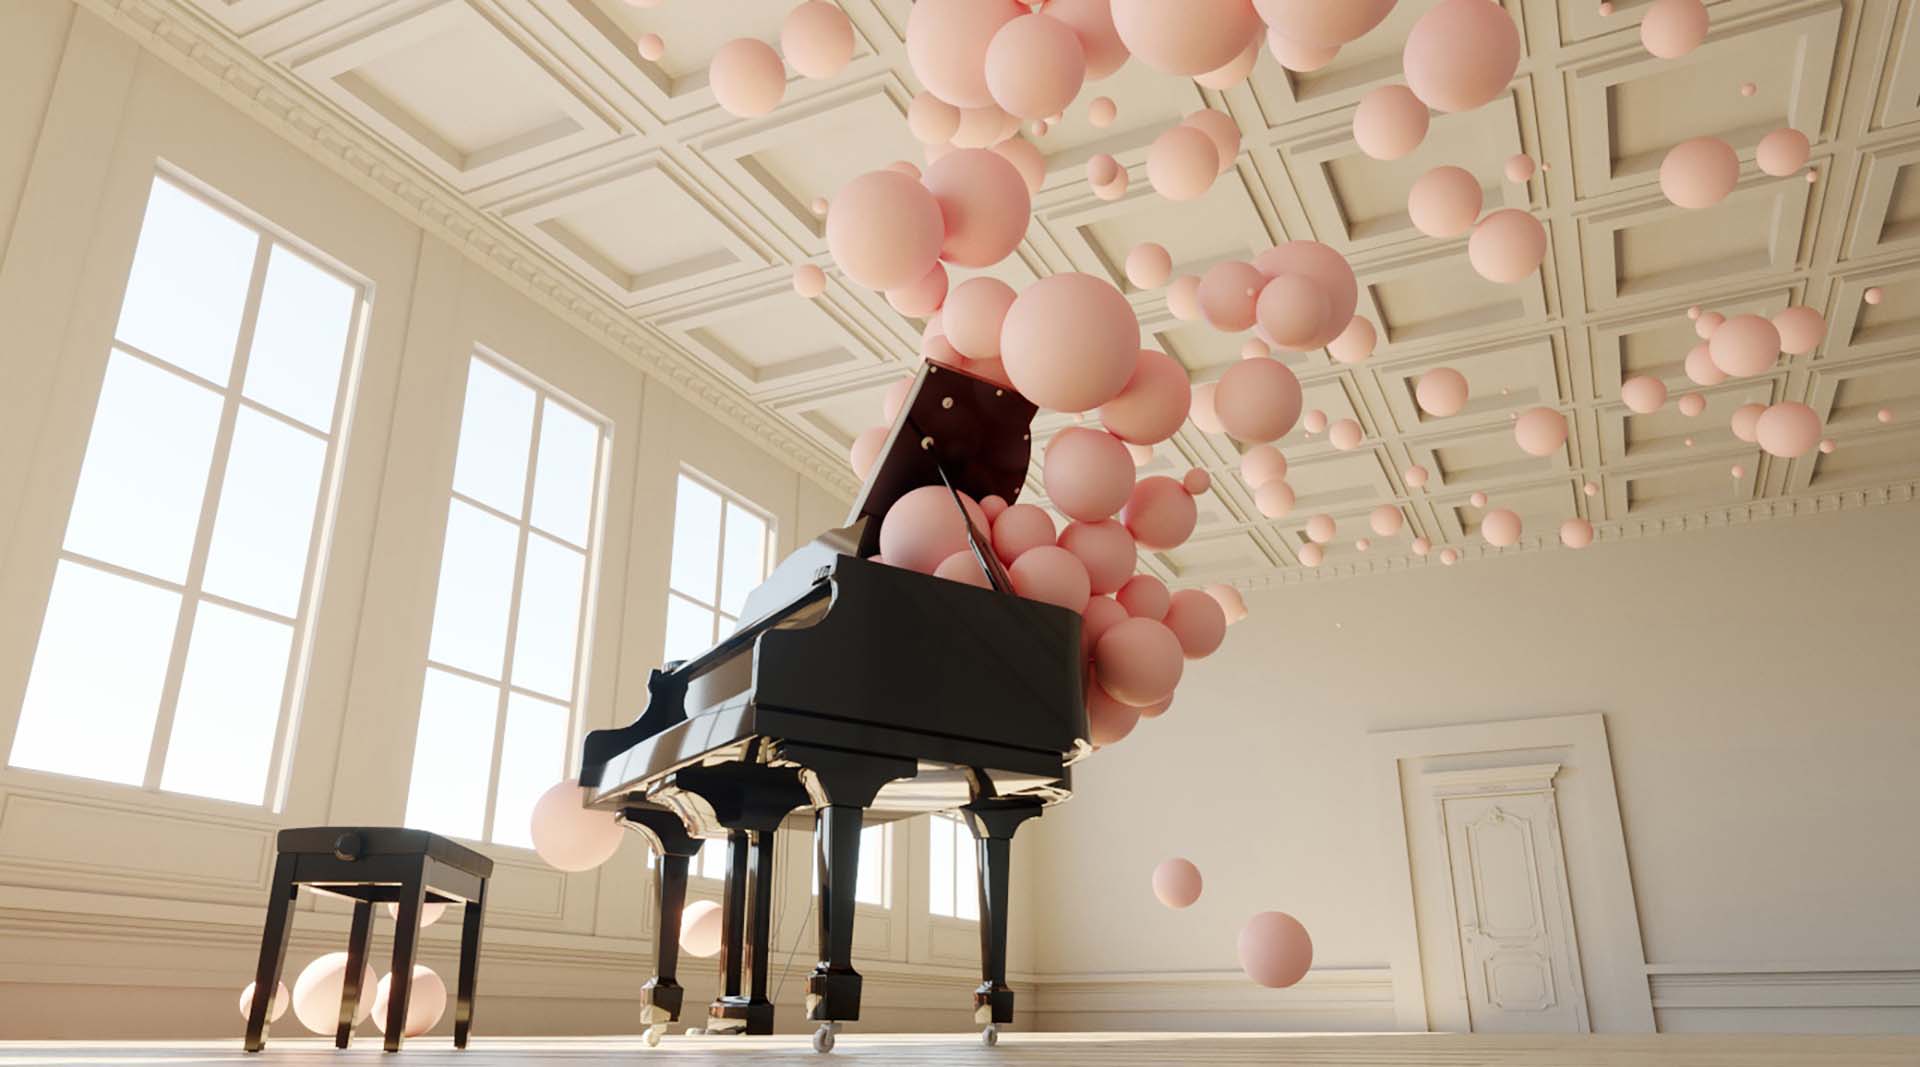 design-motion-3d-photography-octane-redshift-corona-art-visual-animation-render-style-graphic-piano-music-beauty-digital-balloon-art-pink-interiordesign-federicopicci